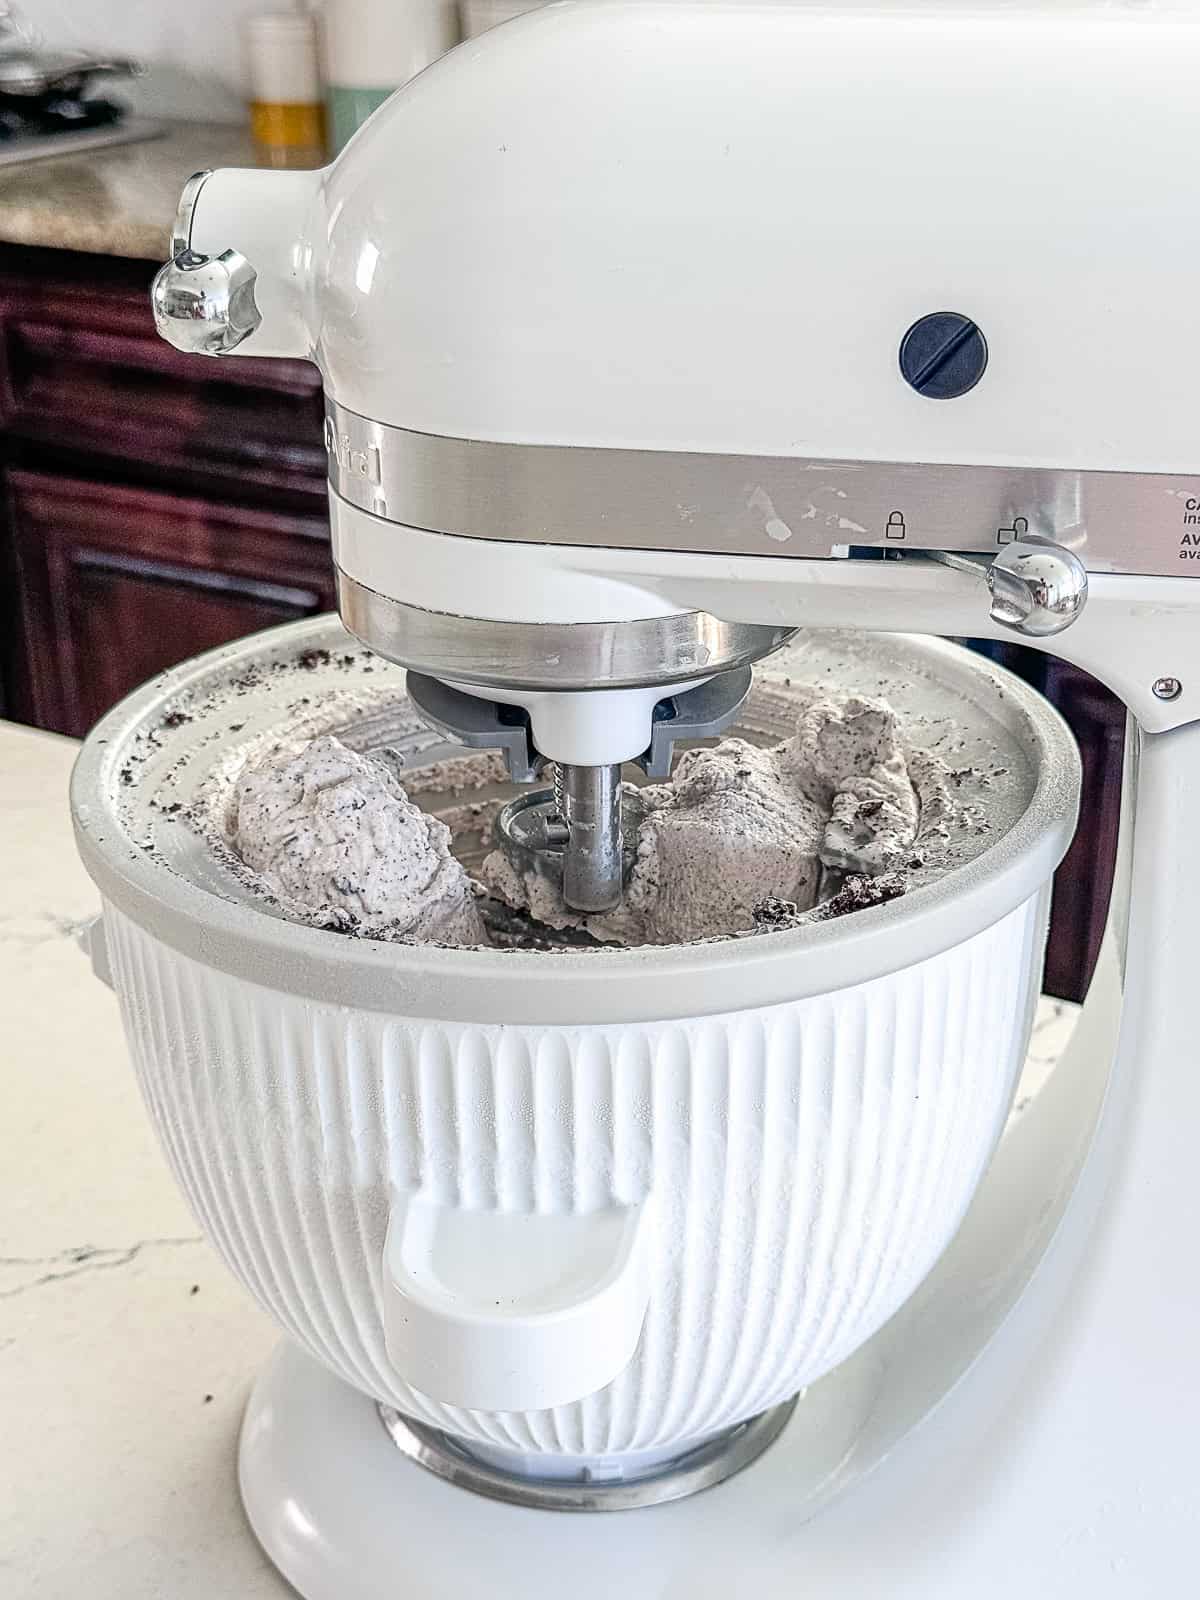 Making Homemade Cookies and Cream Ice Cream in Kitchenaid Stand Mixer 